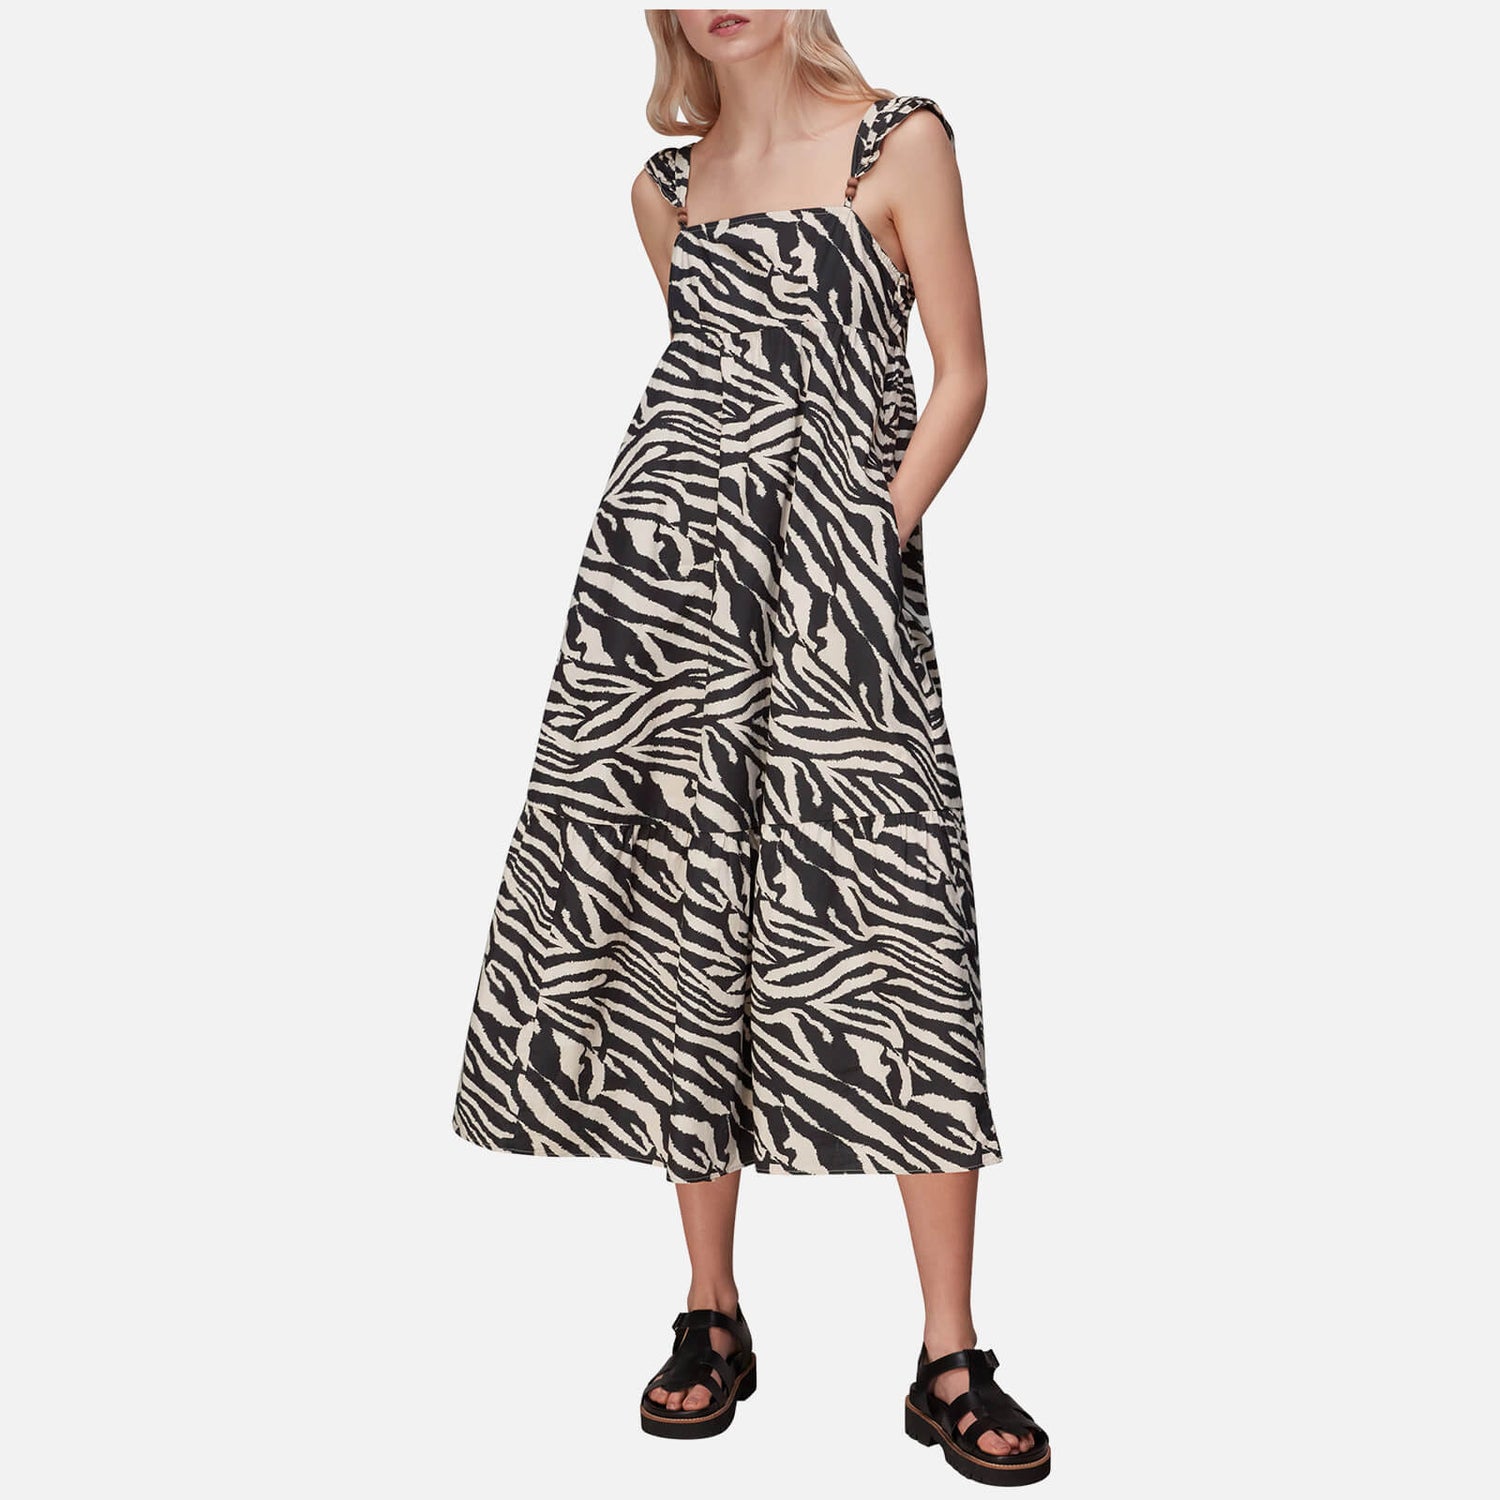 Whistles Women's Mountain Zebra Print Midi Dress - Multi - UK 6